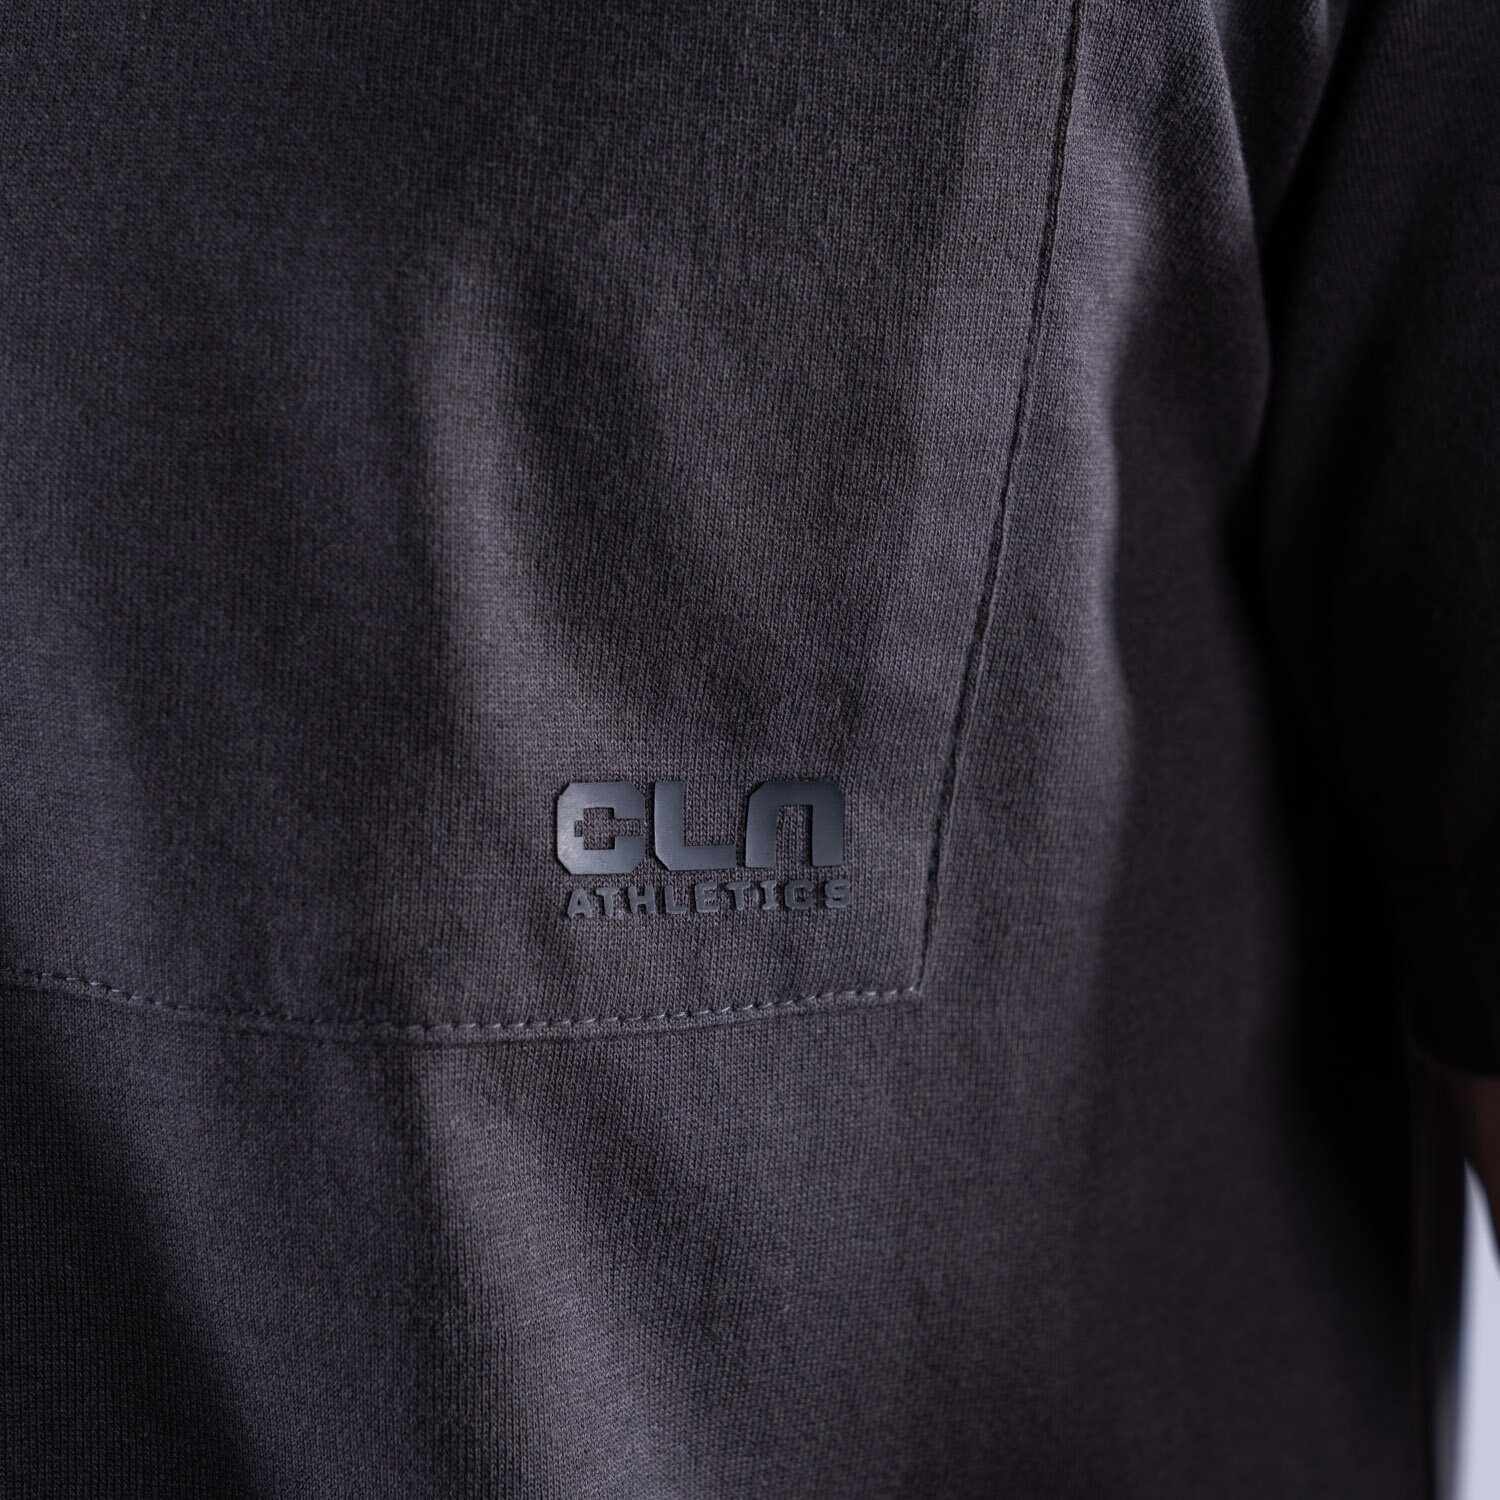 CLN Rick t-shirt Charcoal